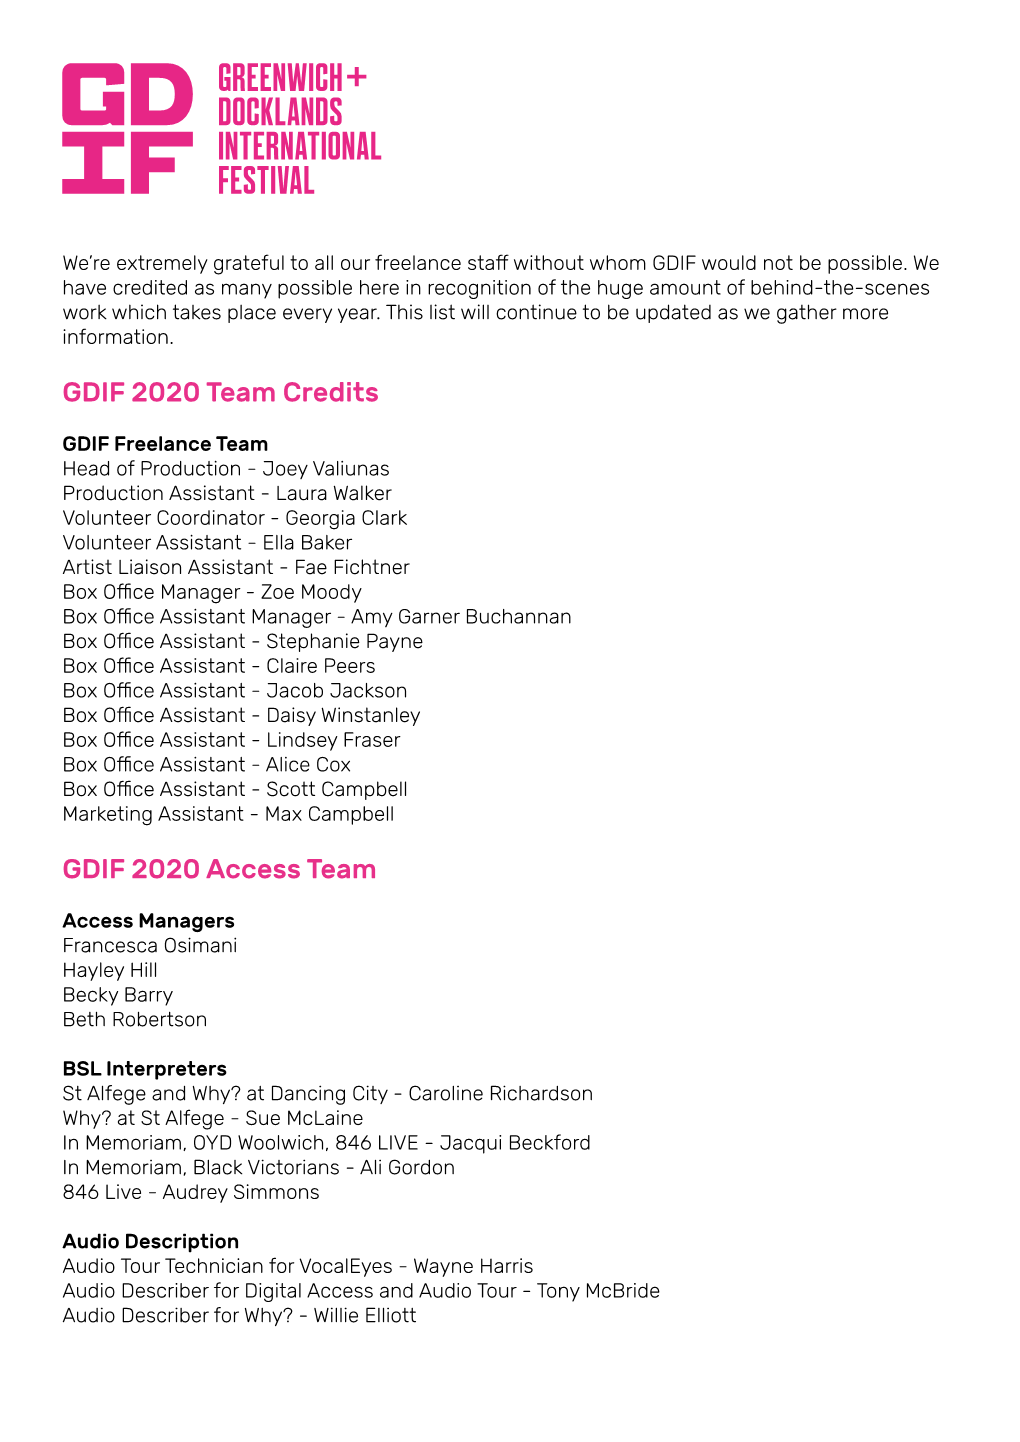 Festival Credits for GDIF 2020